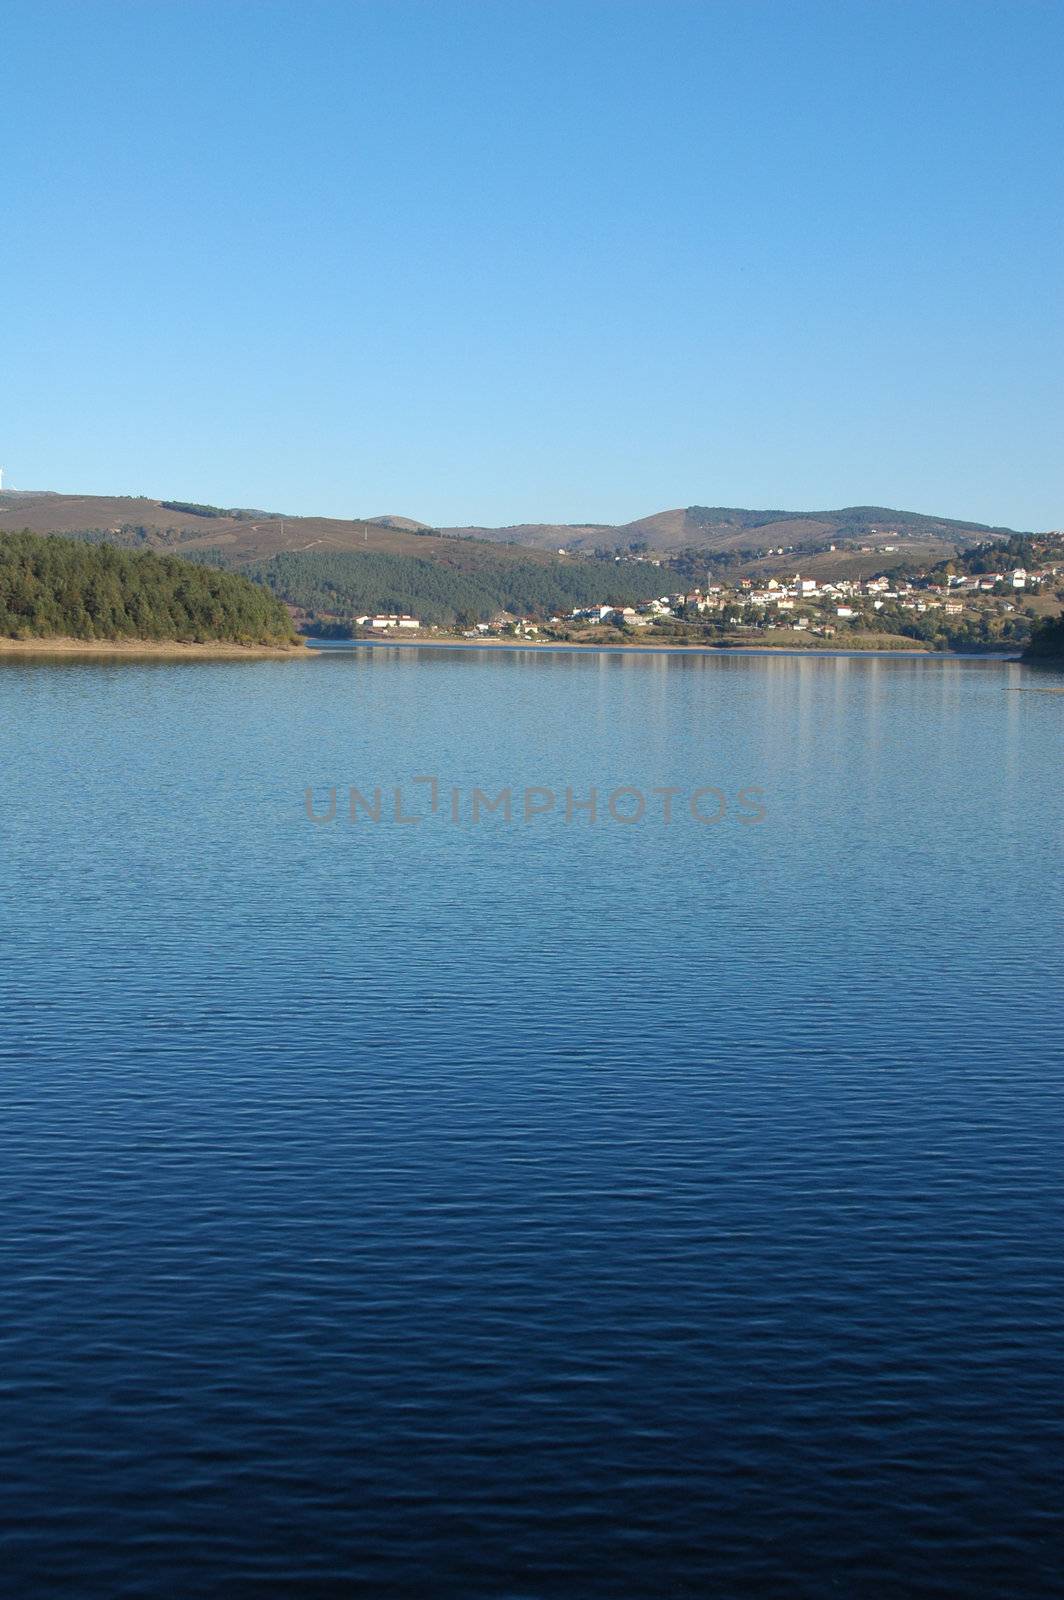 lake of hydroelectric barrage in venda nova, portugal by raalves